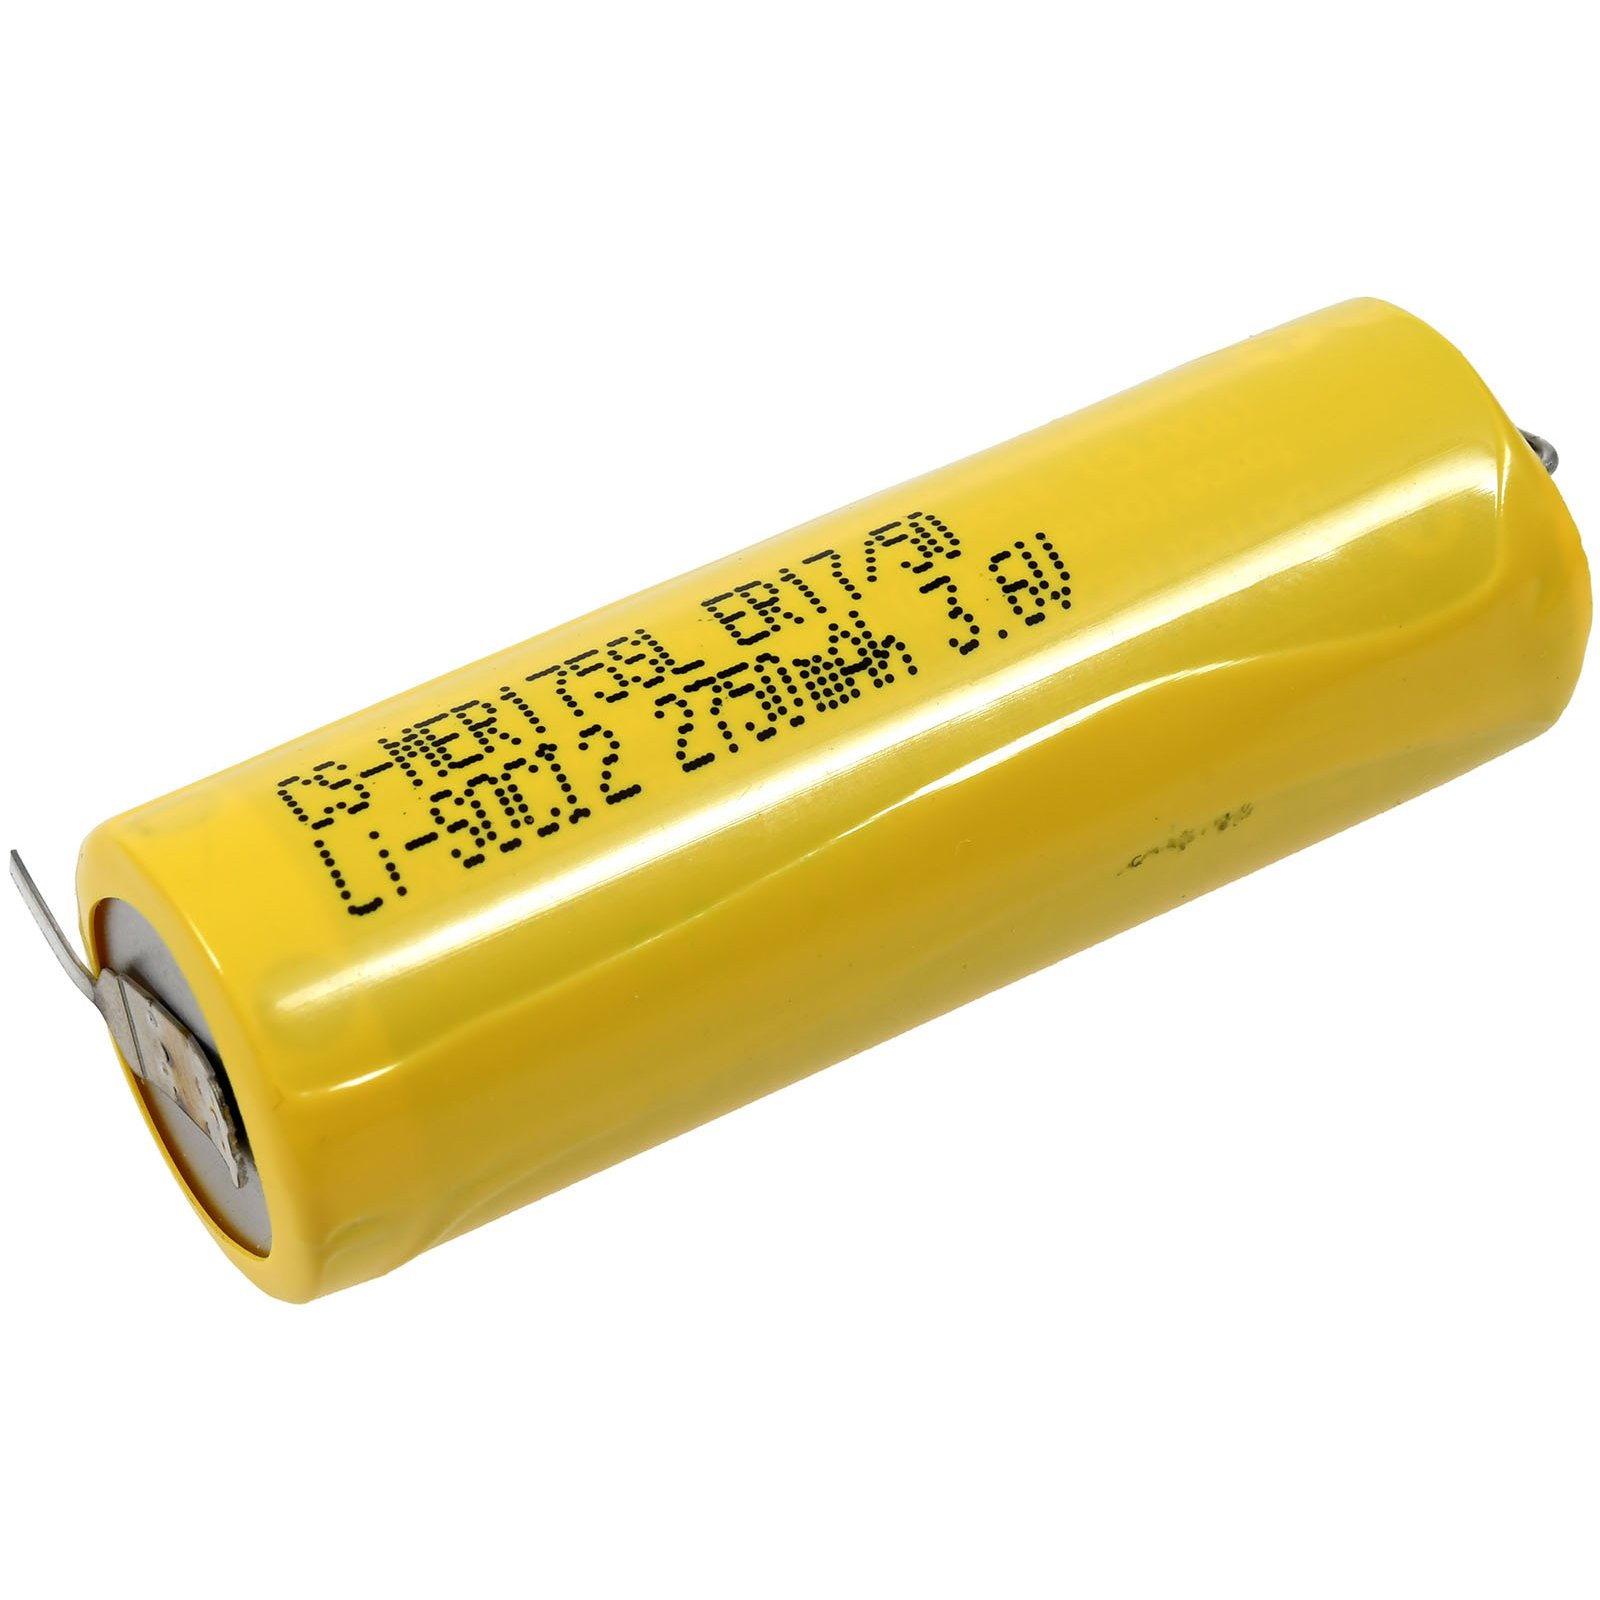 ER17/50 Volt, SPS-Lithiumbatterie Lithium-Thionylchlorid Batterie, für Maxell 3.6 2750mAh POWERY